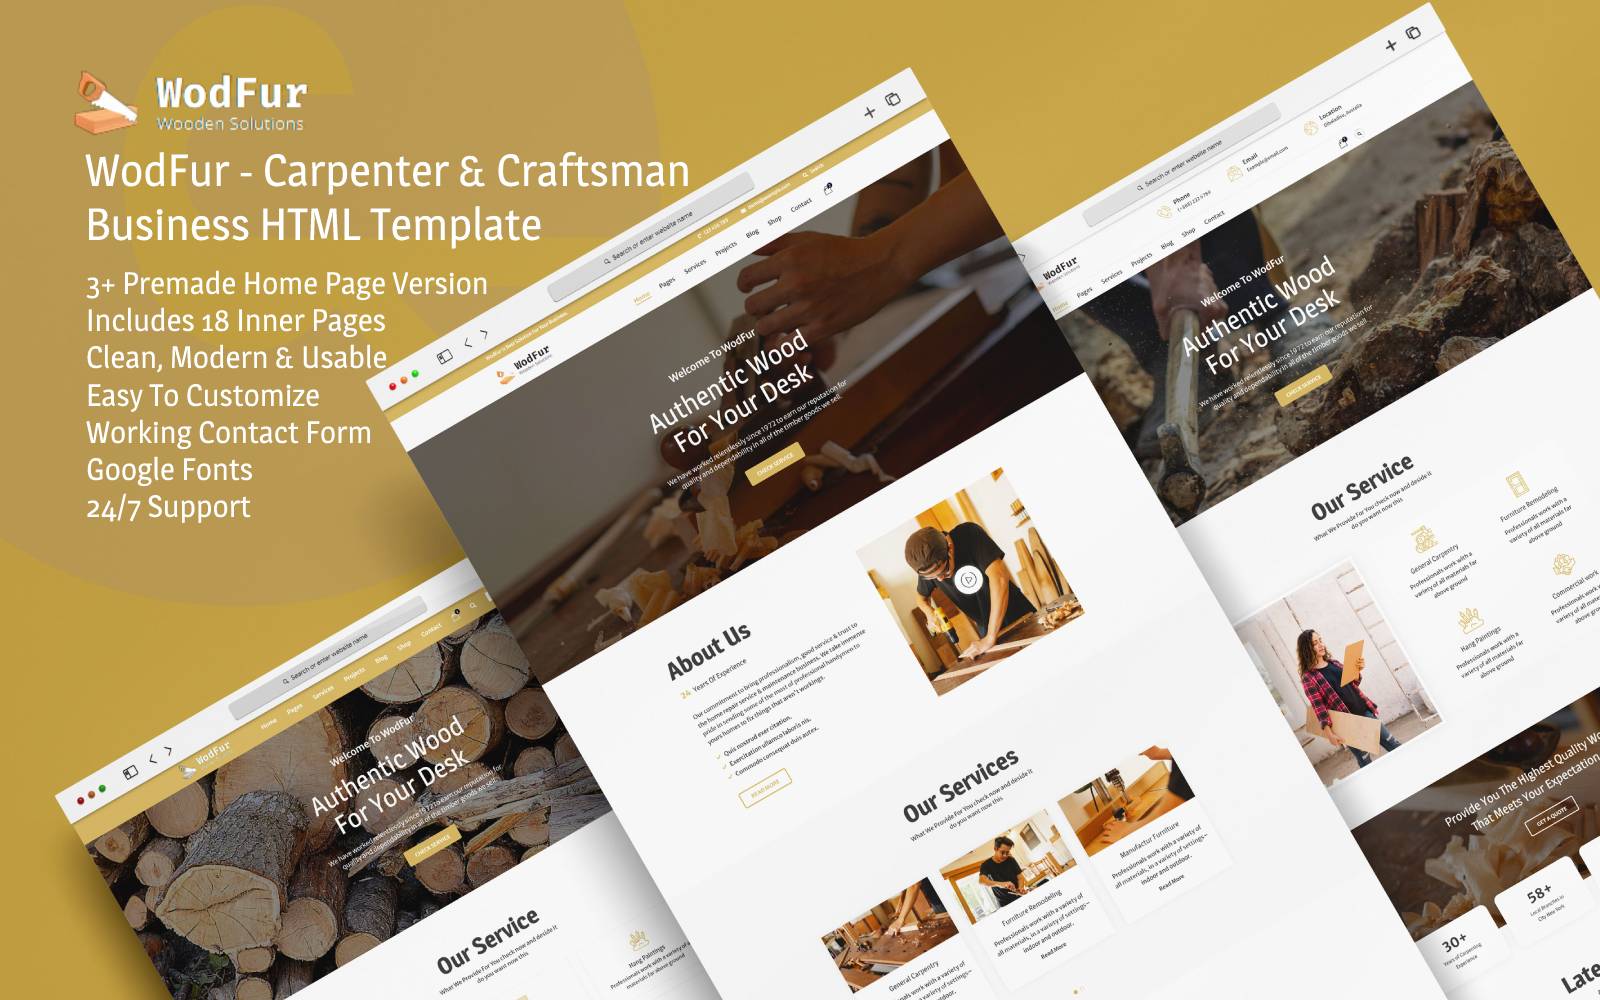 WodFur - Carpenter & Craftsman Business HTML Template